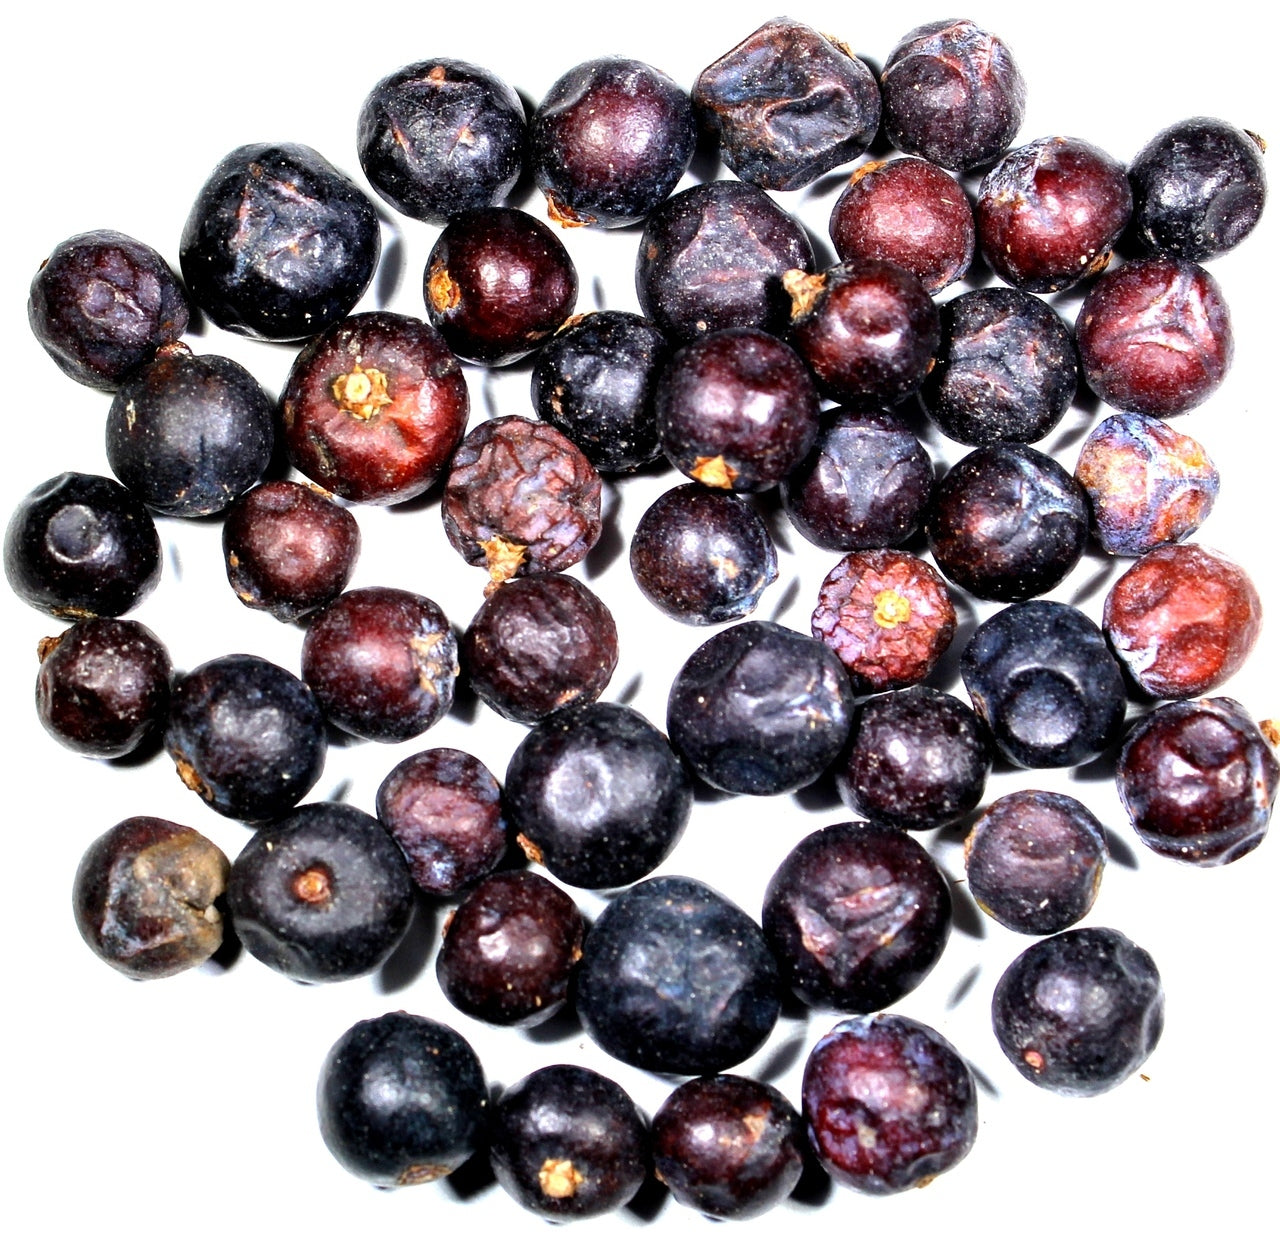 Spices-Juniper Berry